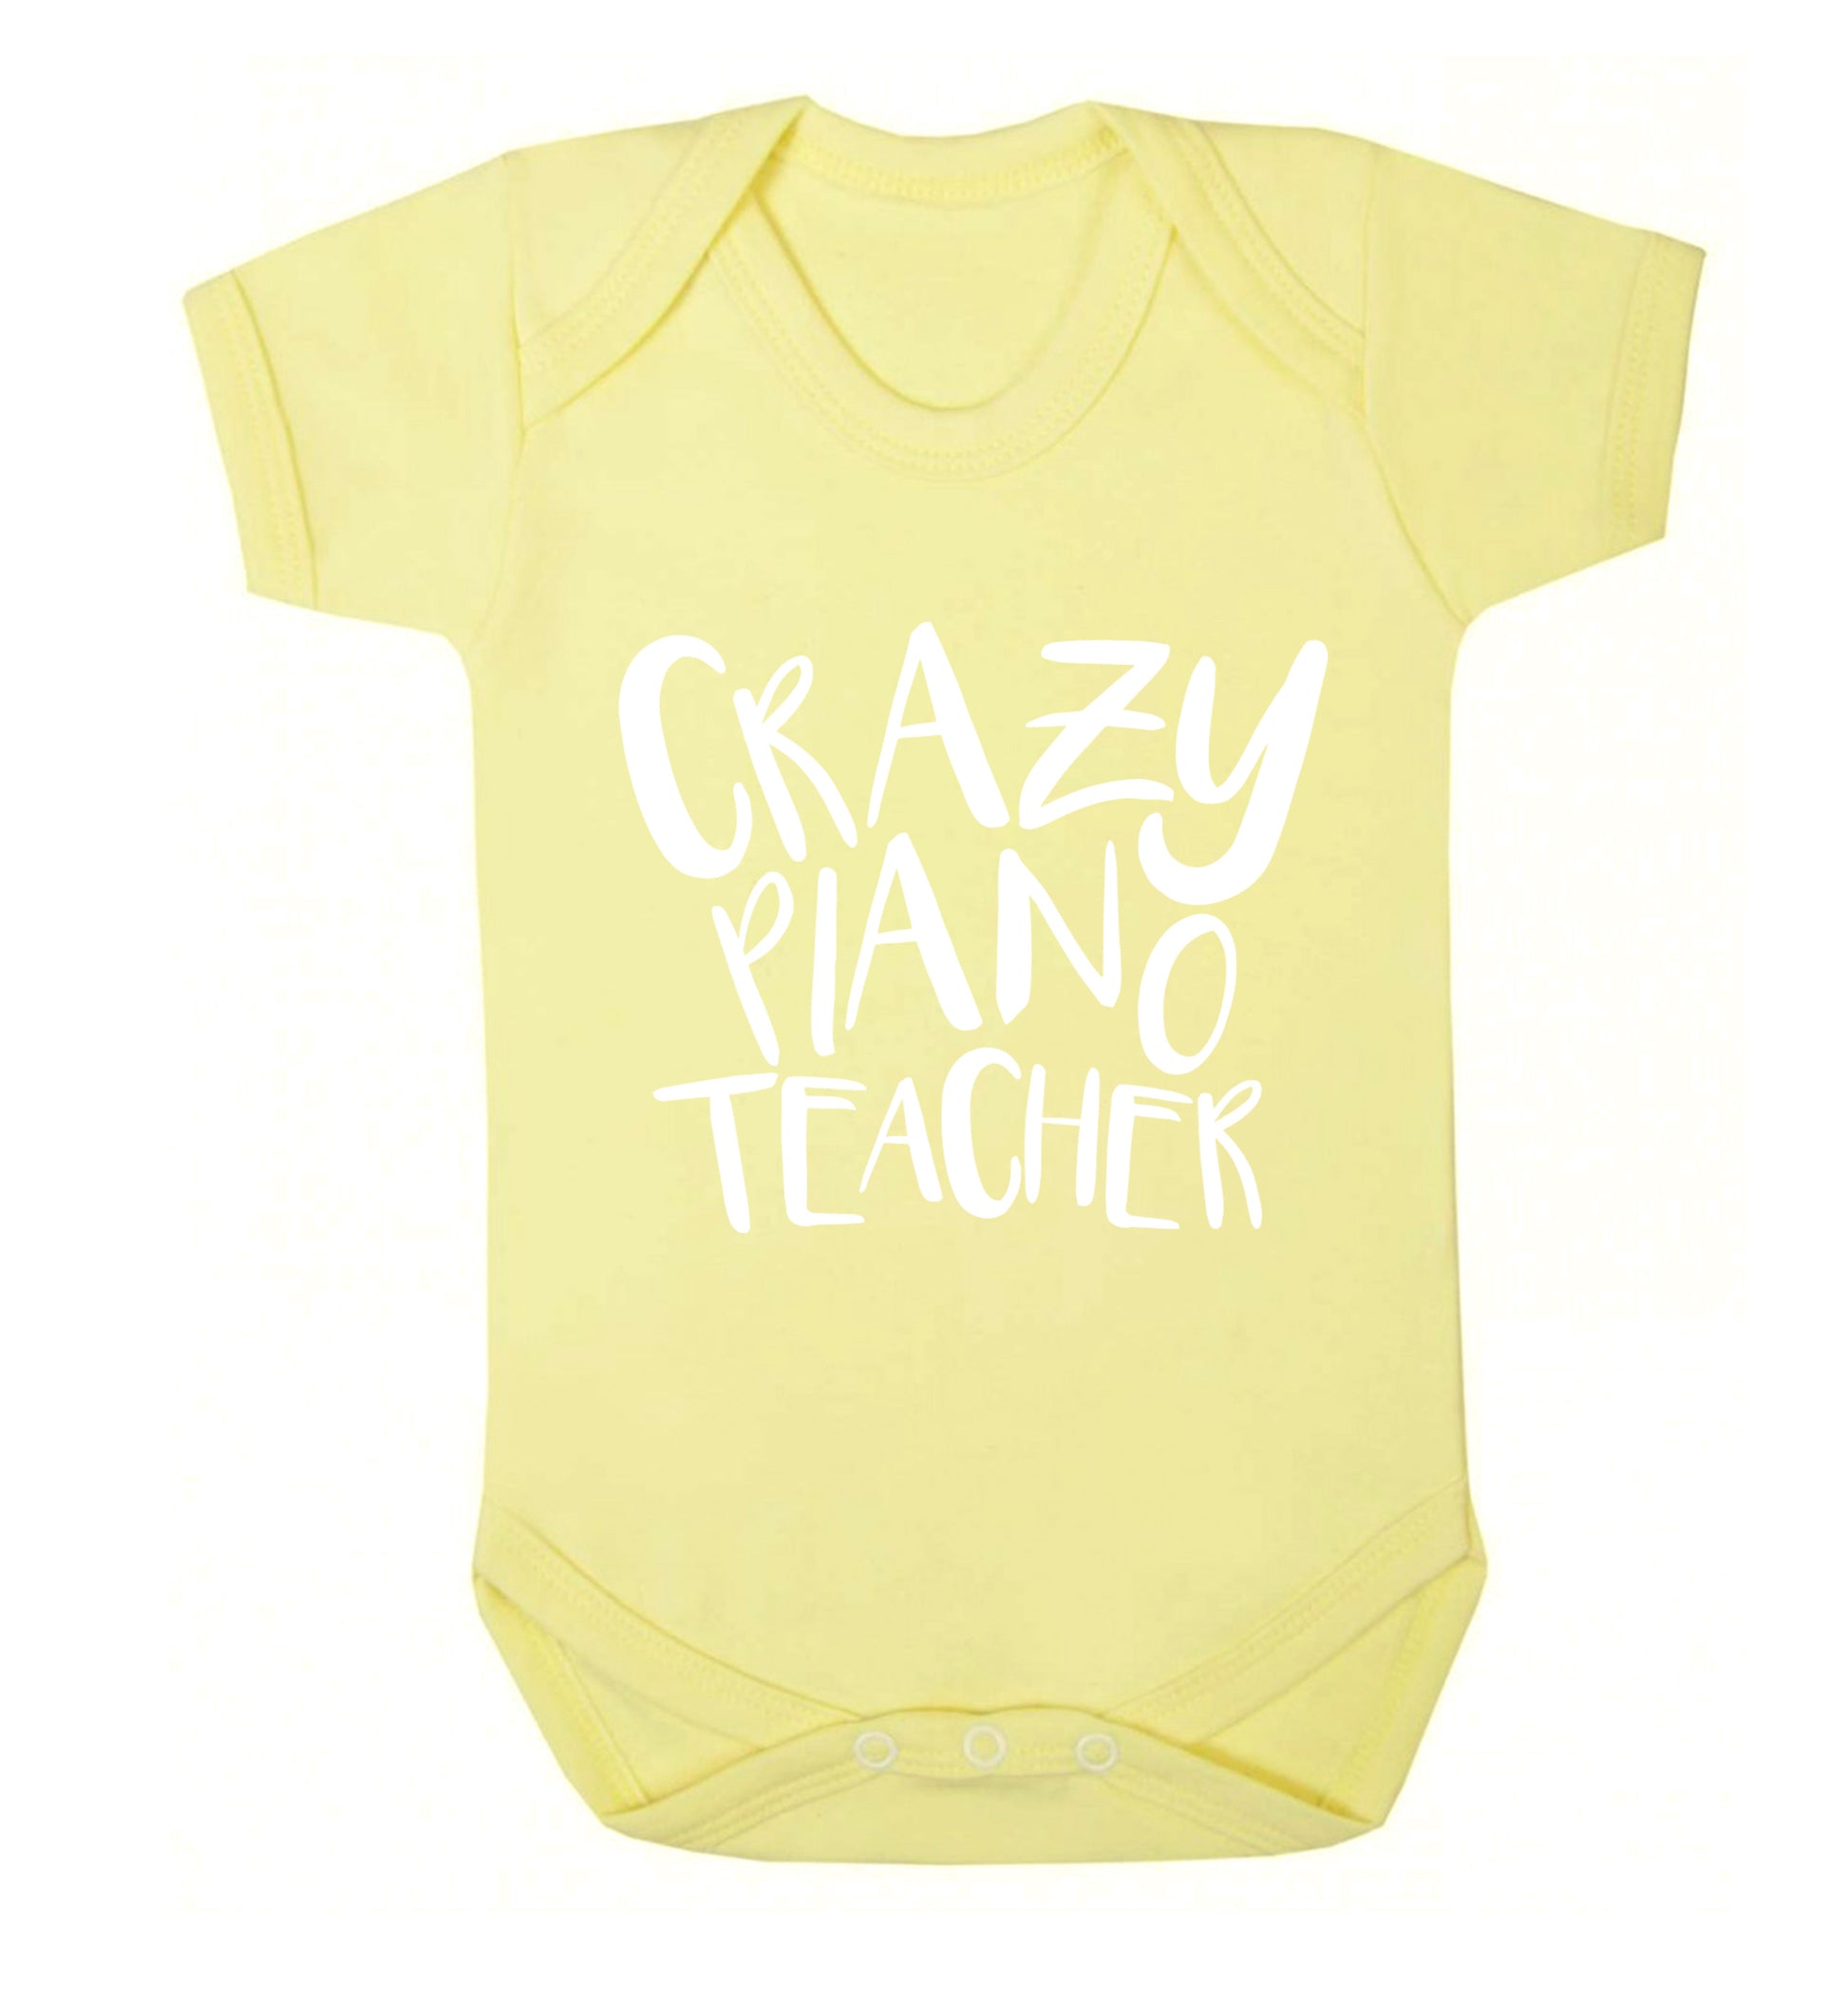 Crazy piano teacher Baby Vest pale yellow 18-24 months